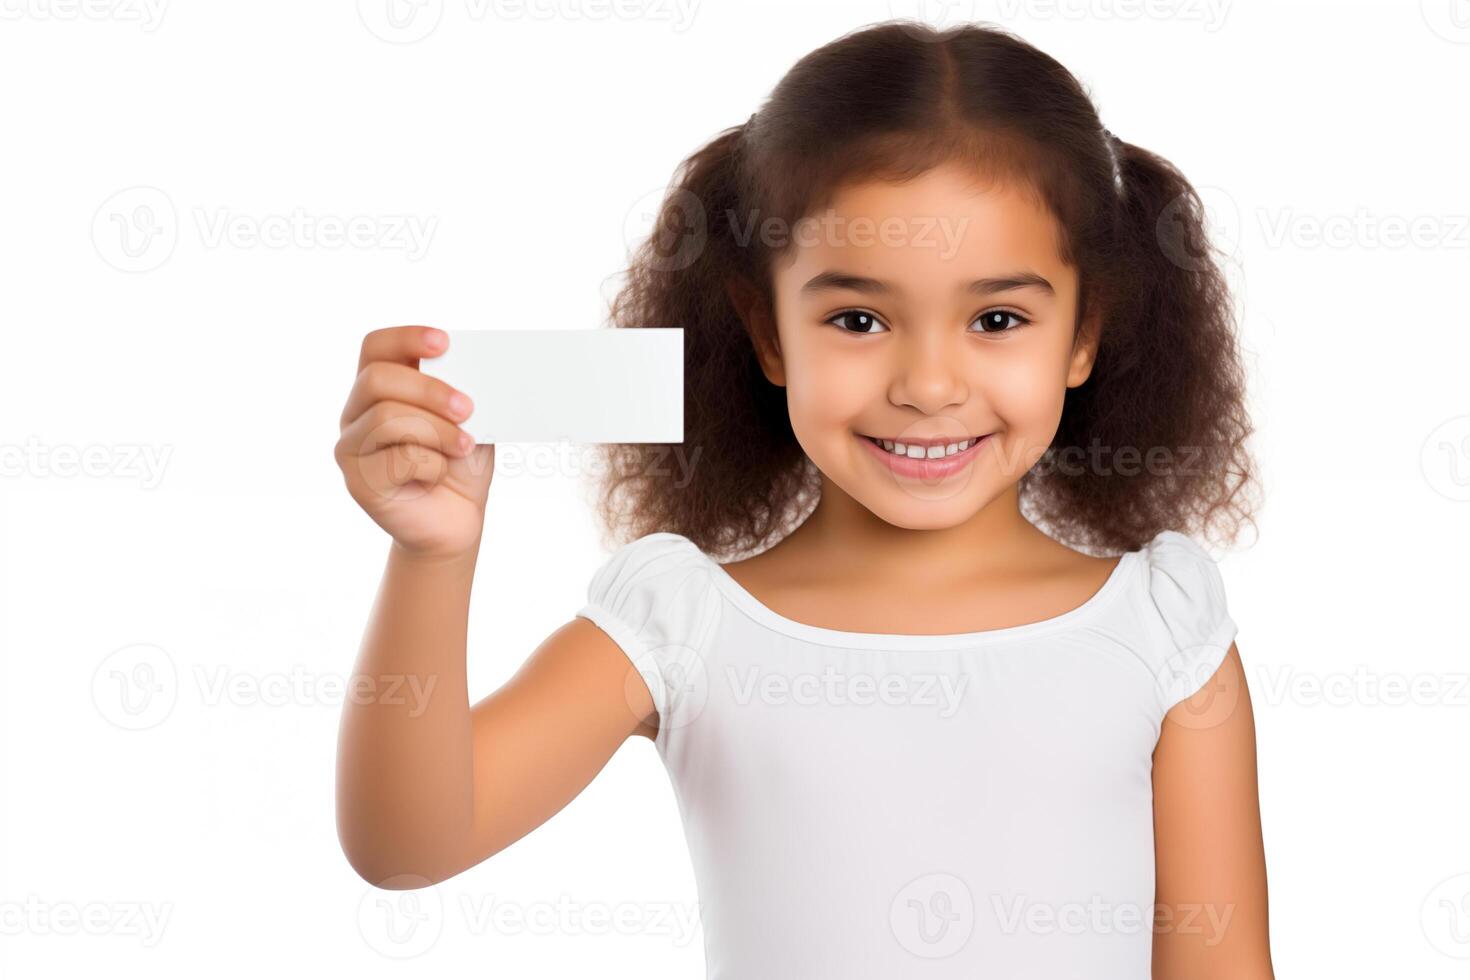 glimlachen klein meisje overhandigen een blanco bedrijf kaart over- wit achtergrond foto